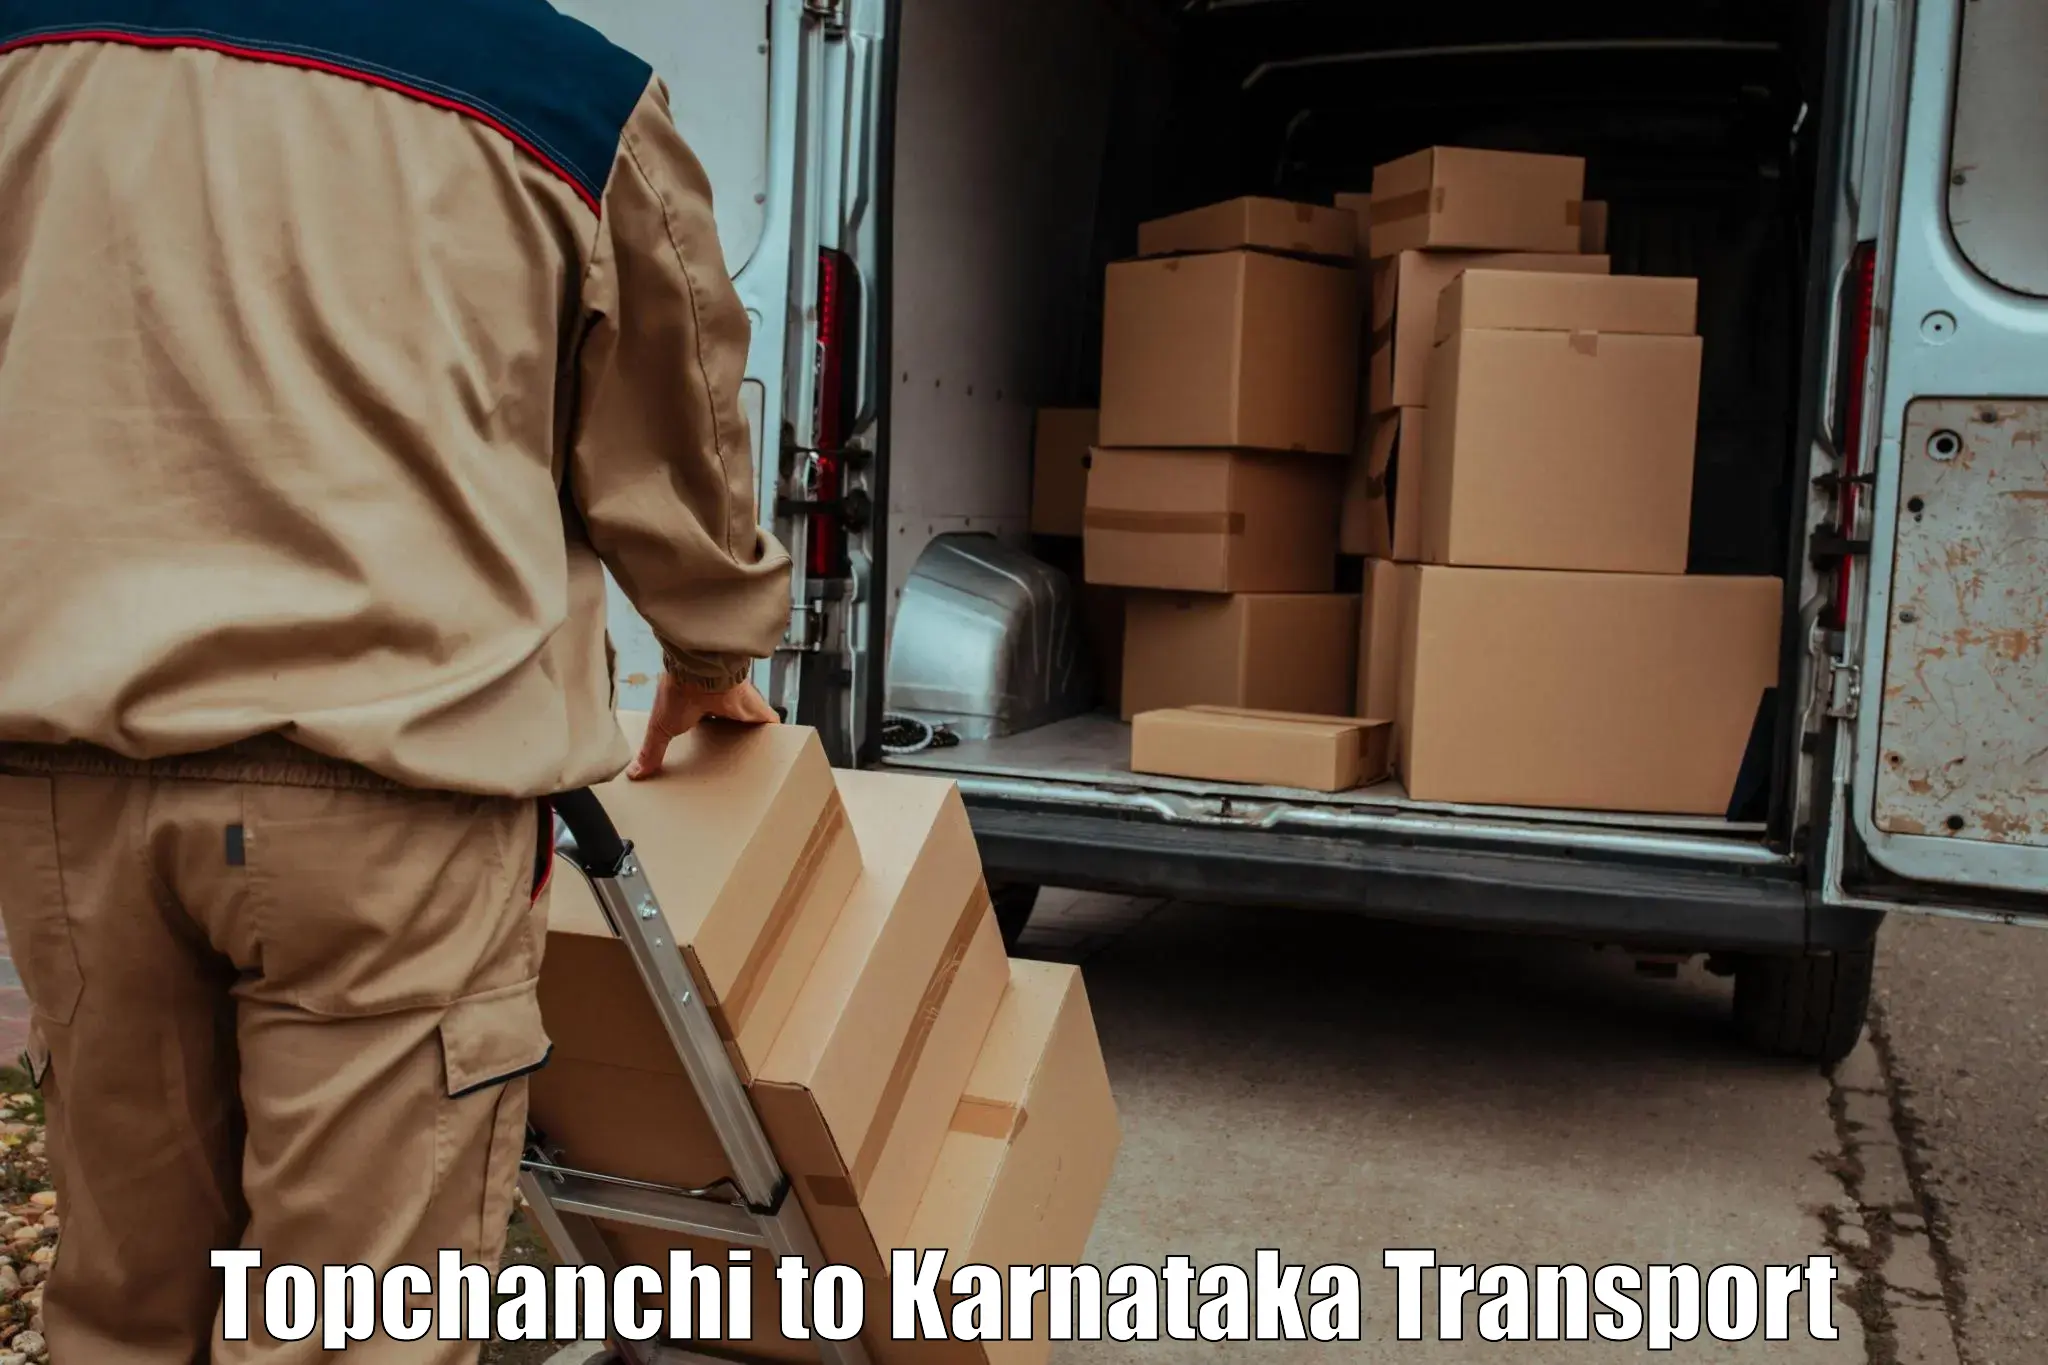 Two wheeler parcel service Topchanchi to Magadi